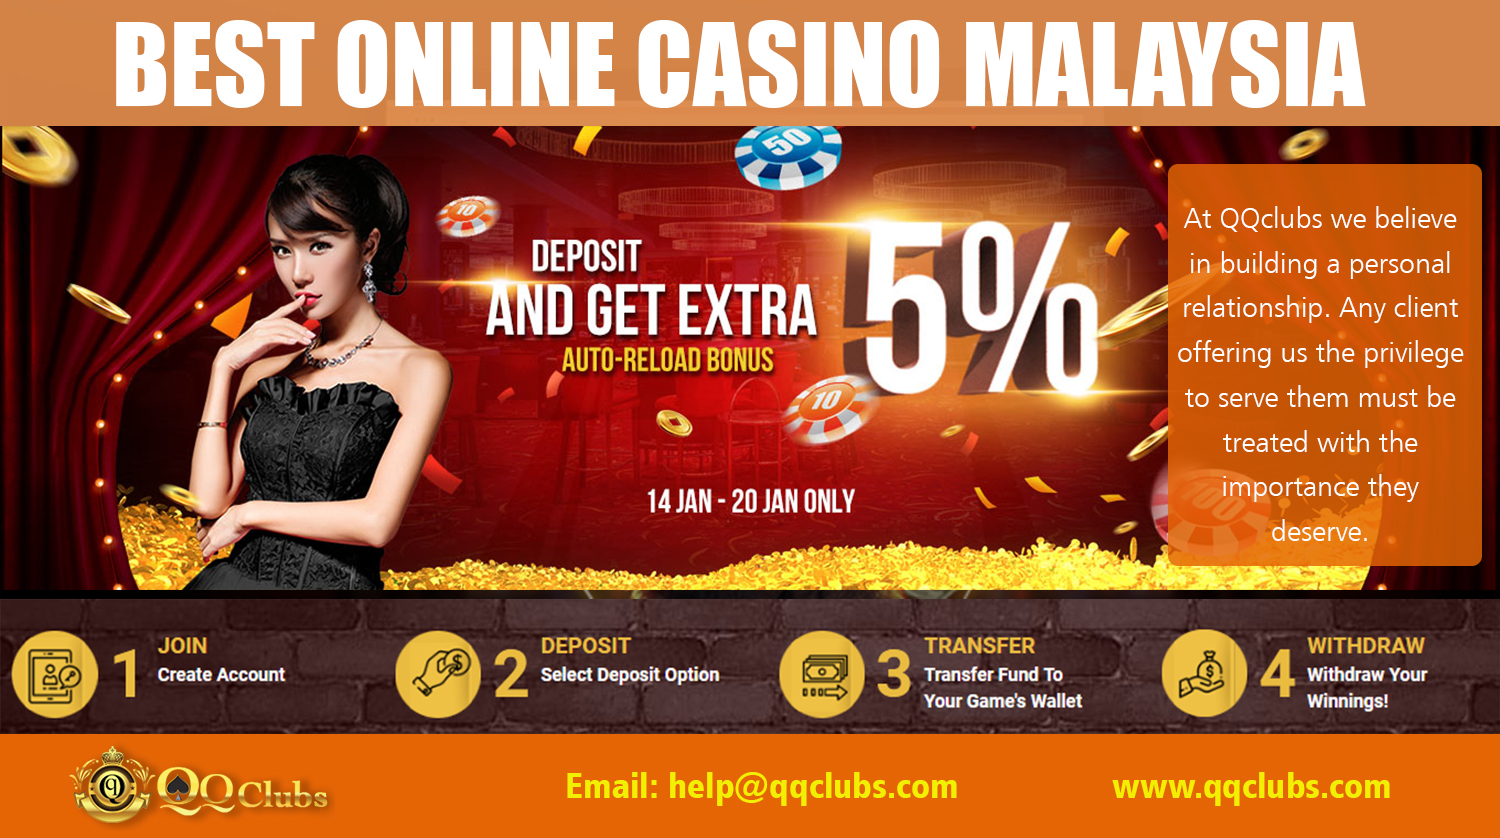 Top online casino malaysia topic адмирал х казино онлайн играть бесплатно